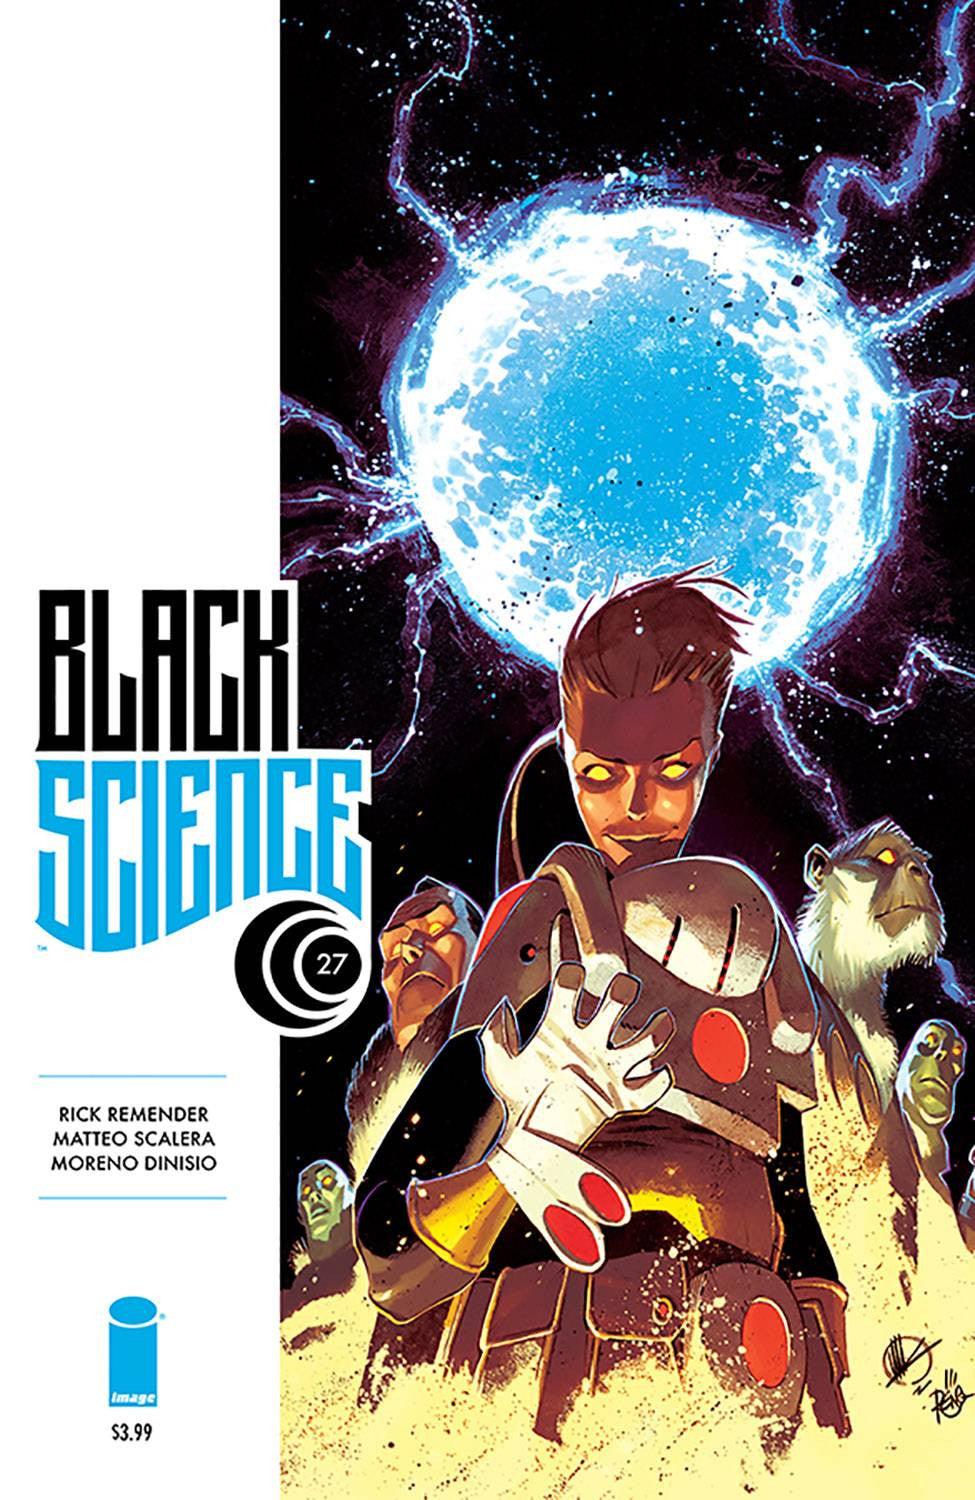 Black Science (2013) #27